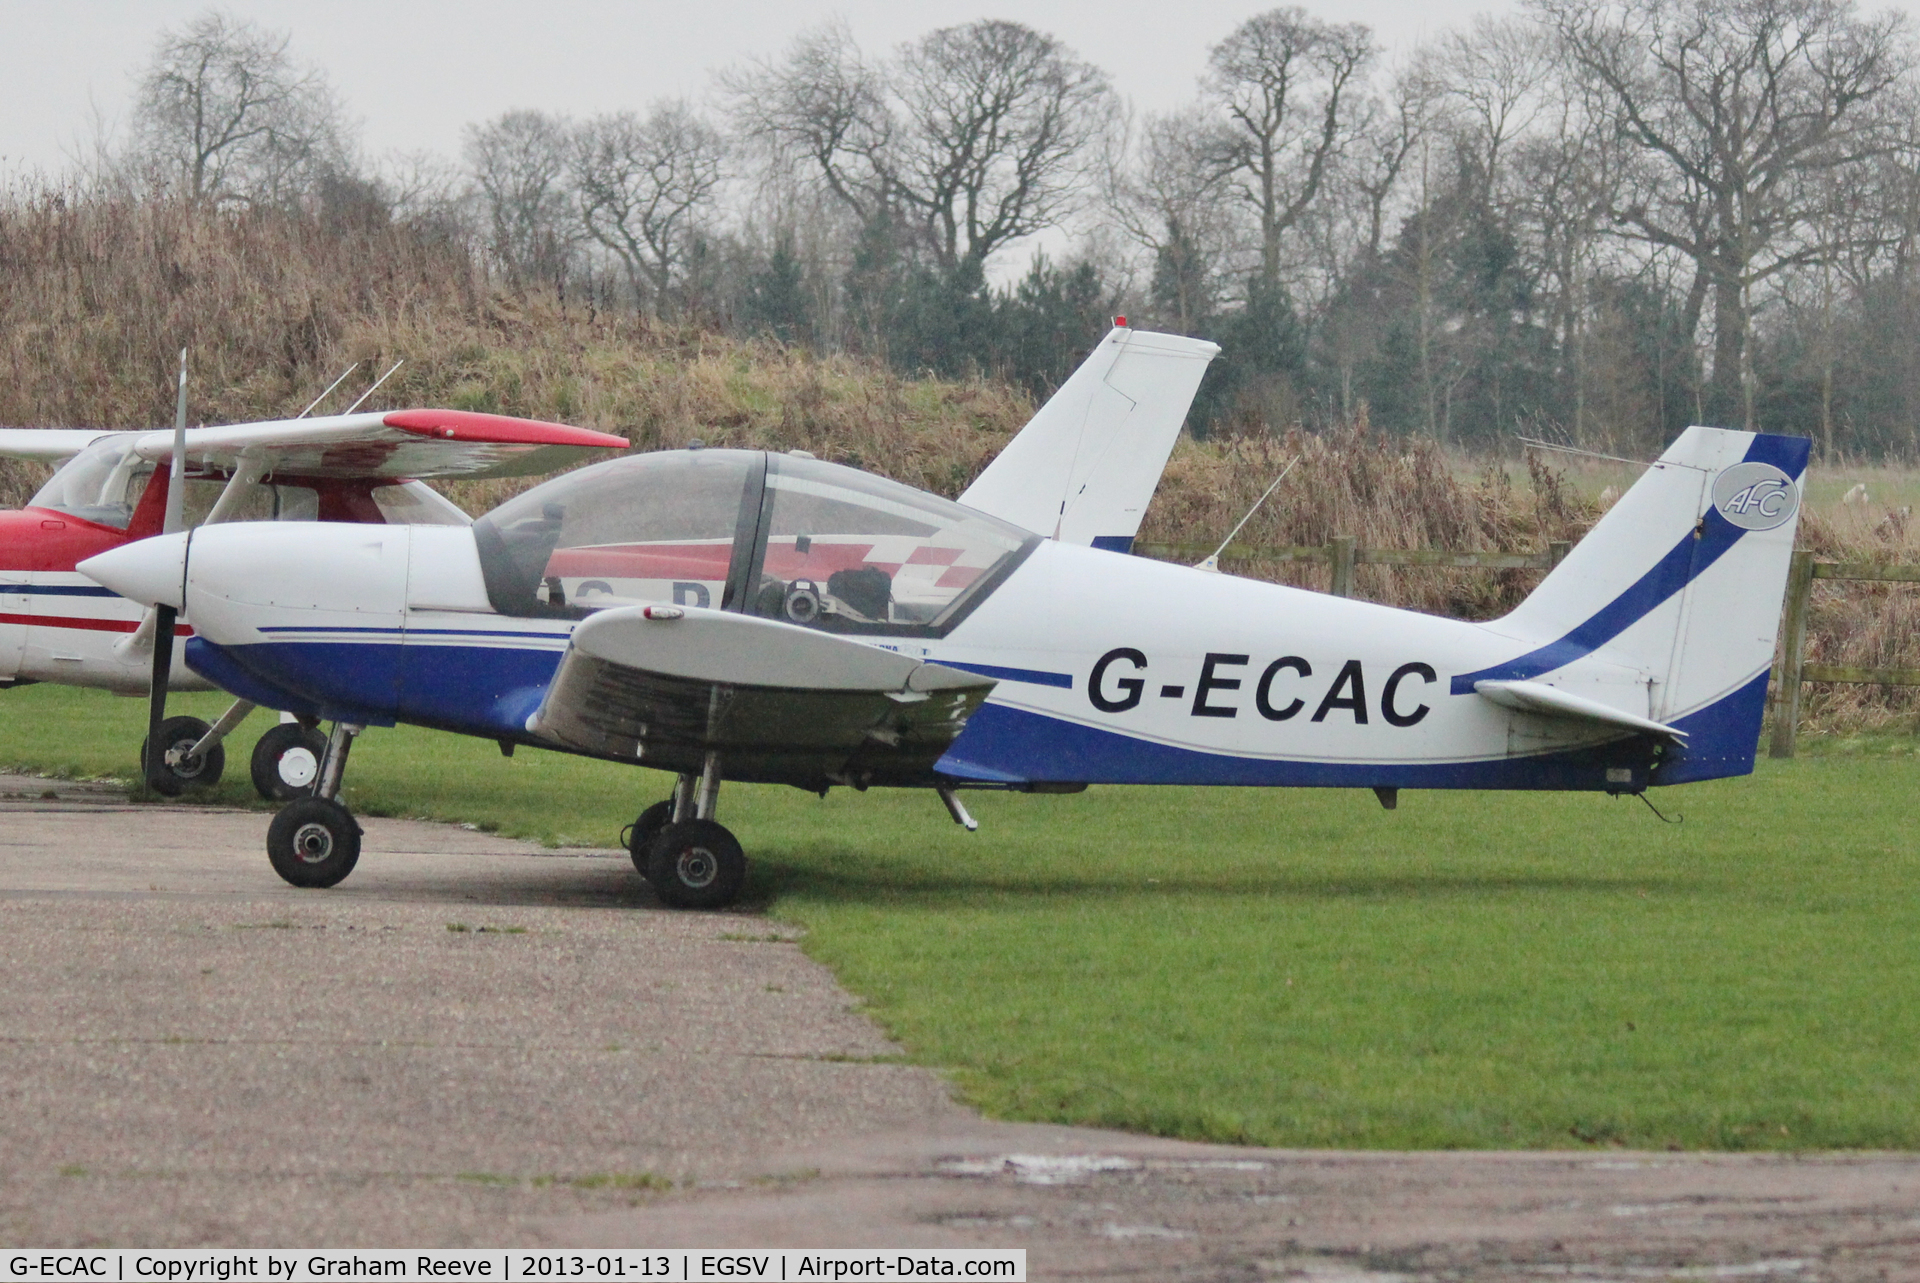 G-ECAC, 2007 Robin R-2120U Alpha C/N 120T-0001, Parked at Old Buckenham.